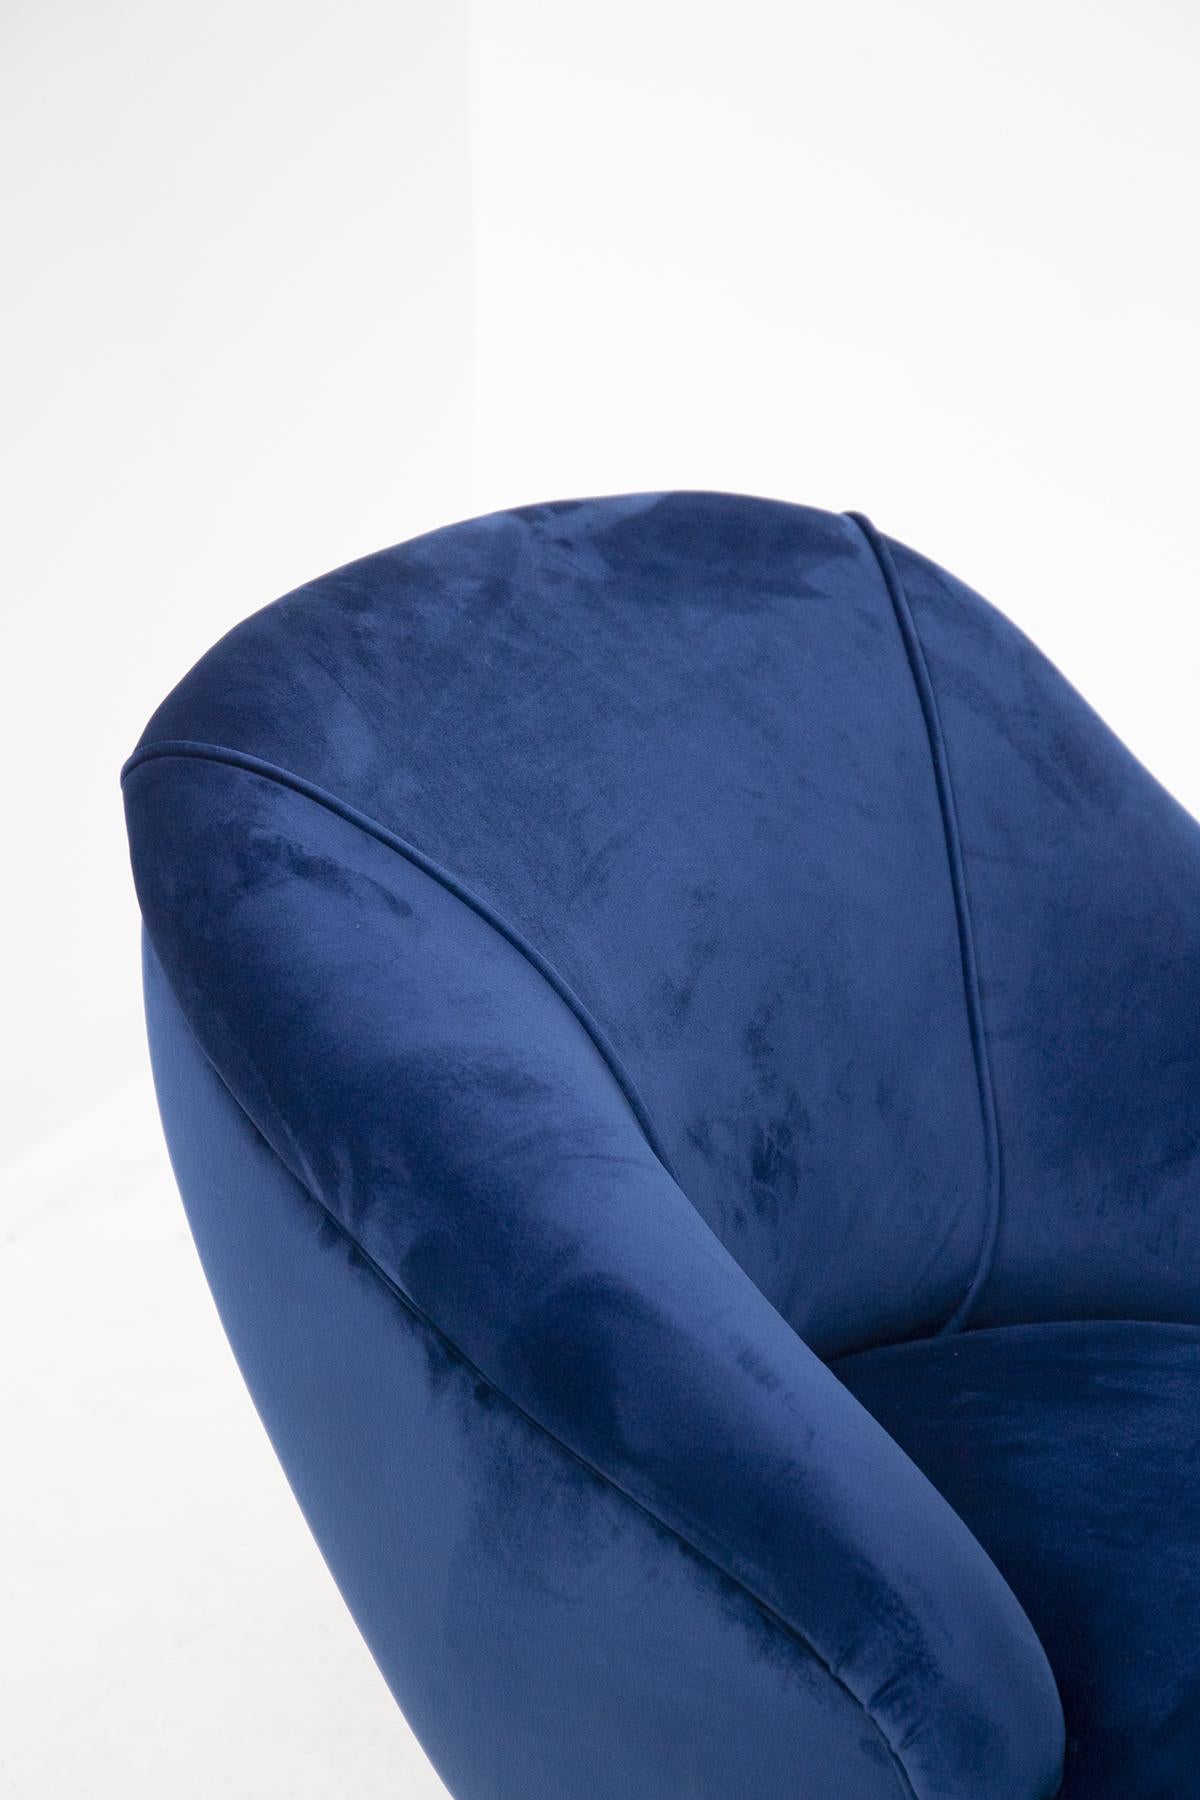 Vintage Blue Velvet Armchairs by Gio Ponti for Casa e Giardino 1